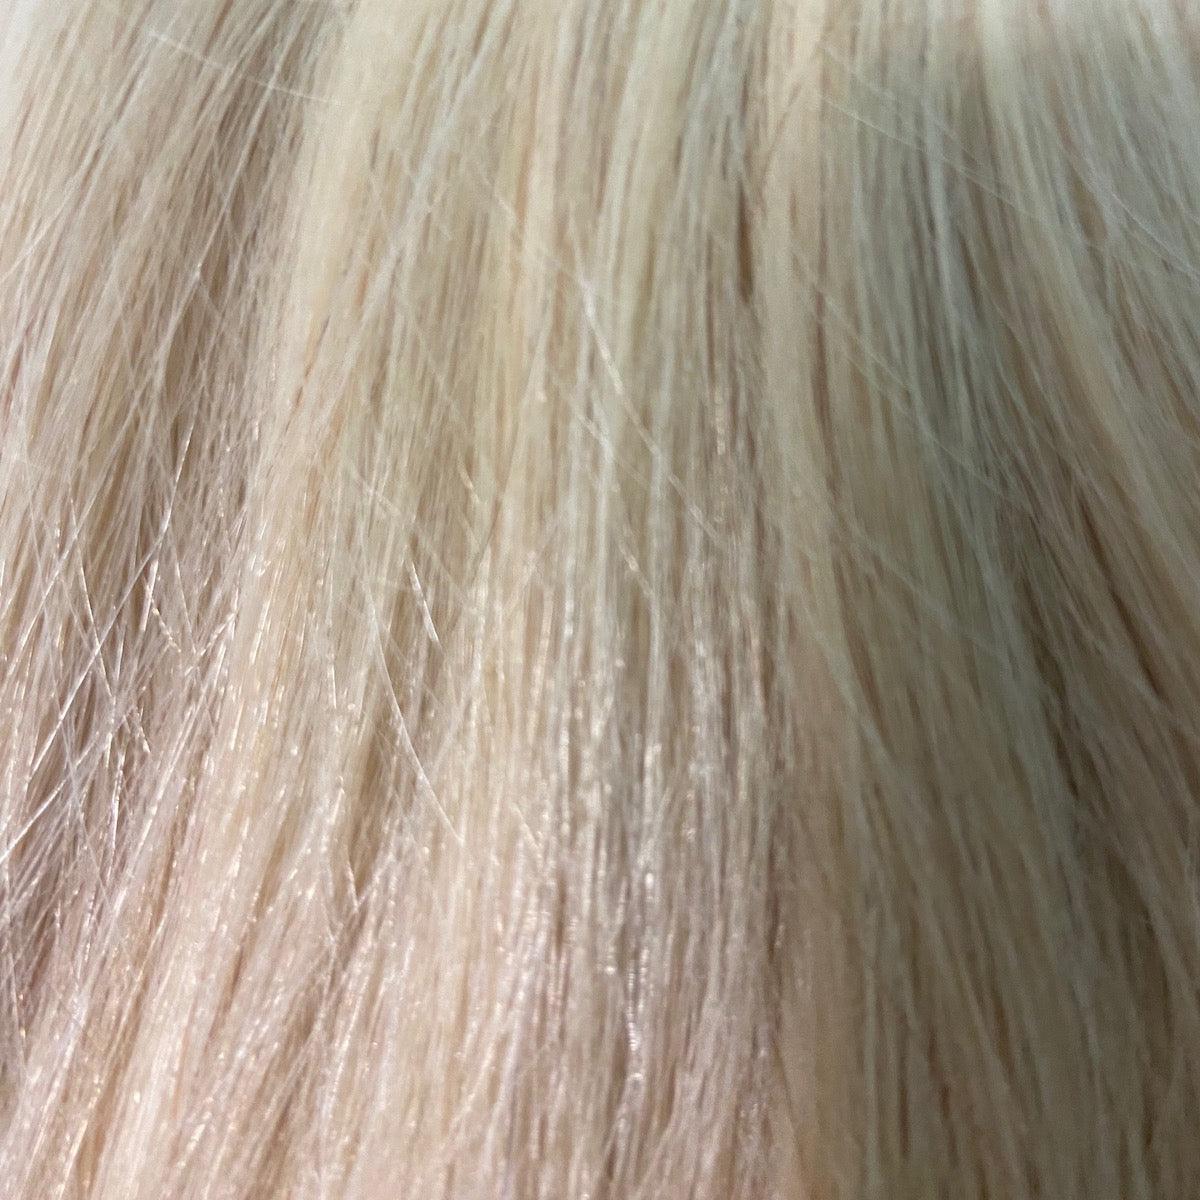 K-Tip 18" 25g Professional Hair Extensions - #19 Desert Blonde